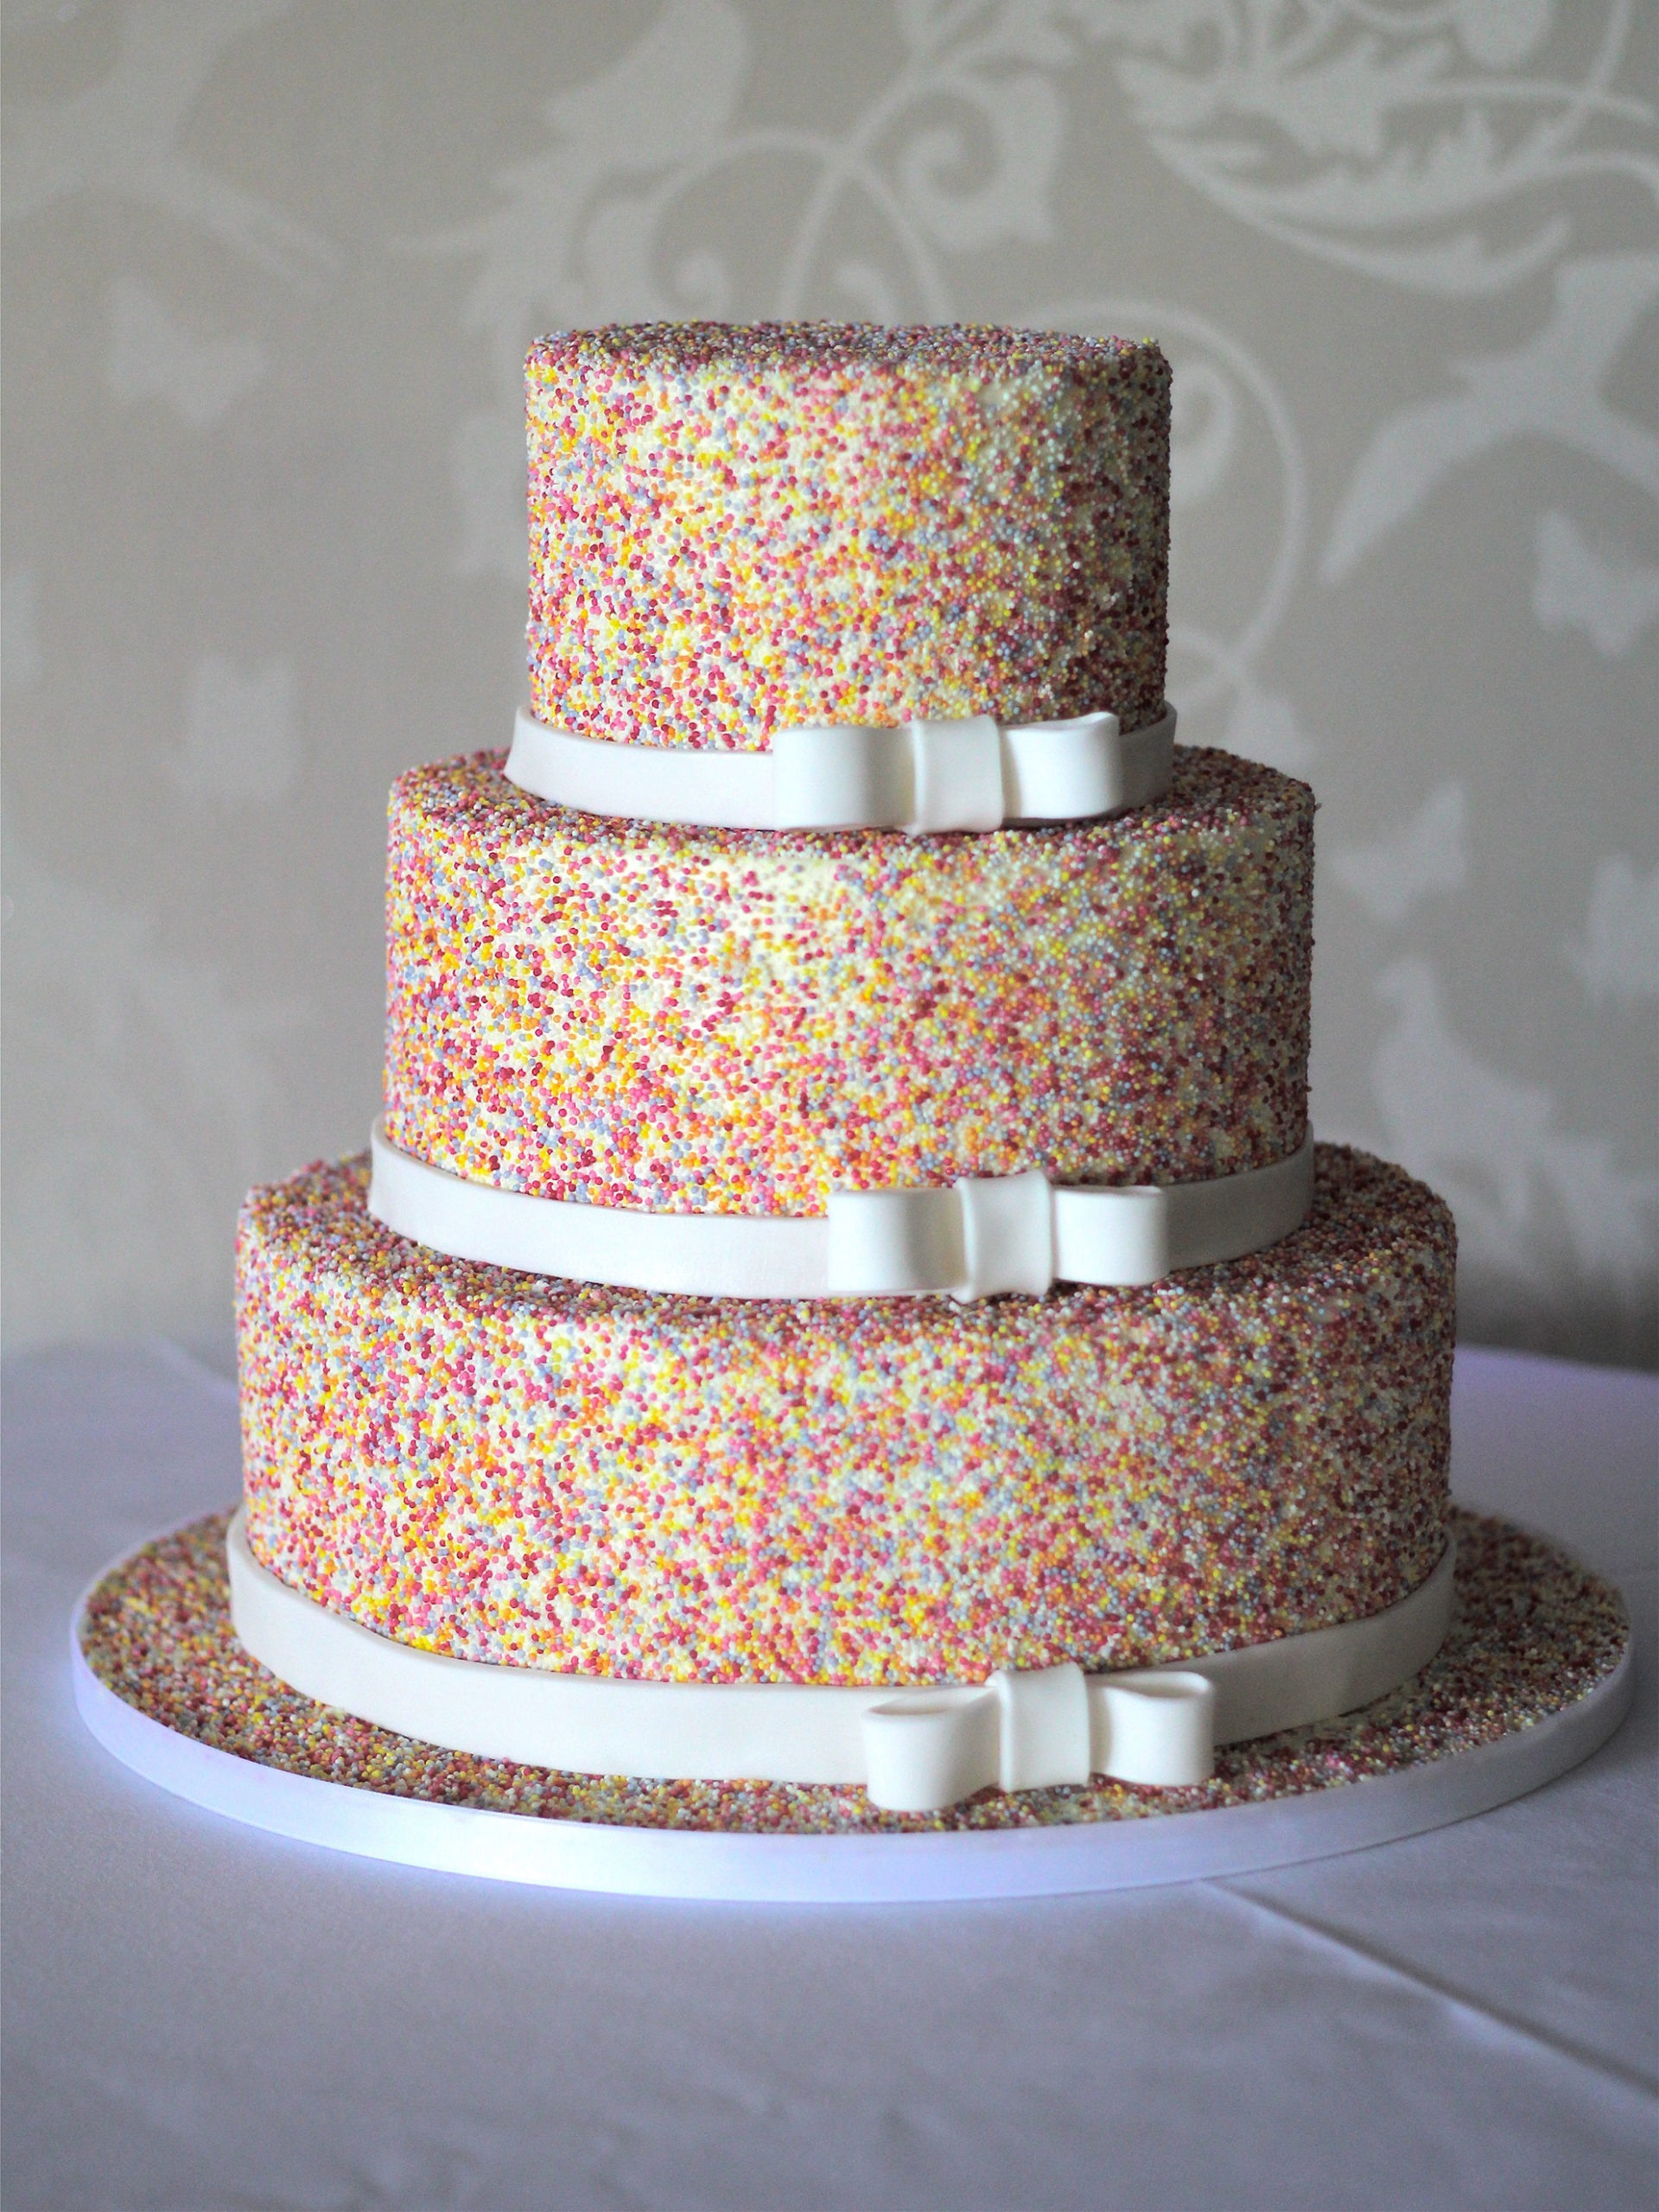 Sweet paradise: eight favourite designer wedding cakes